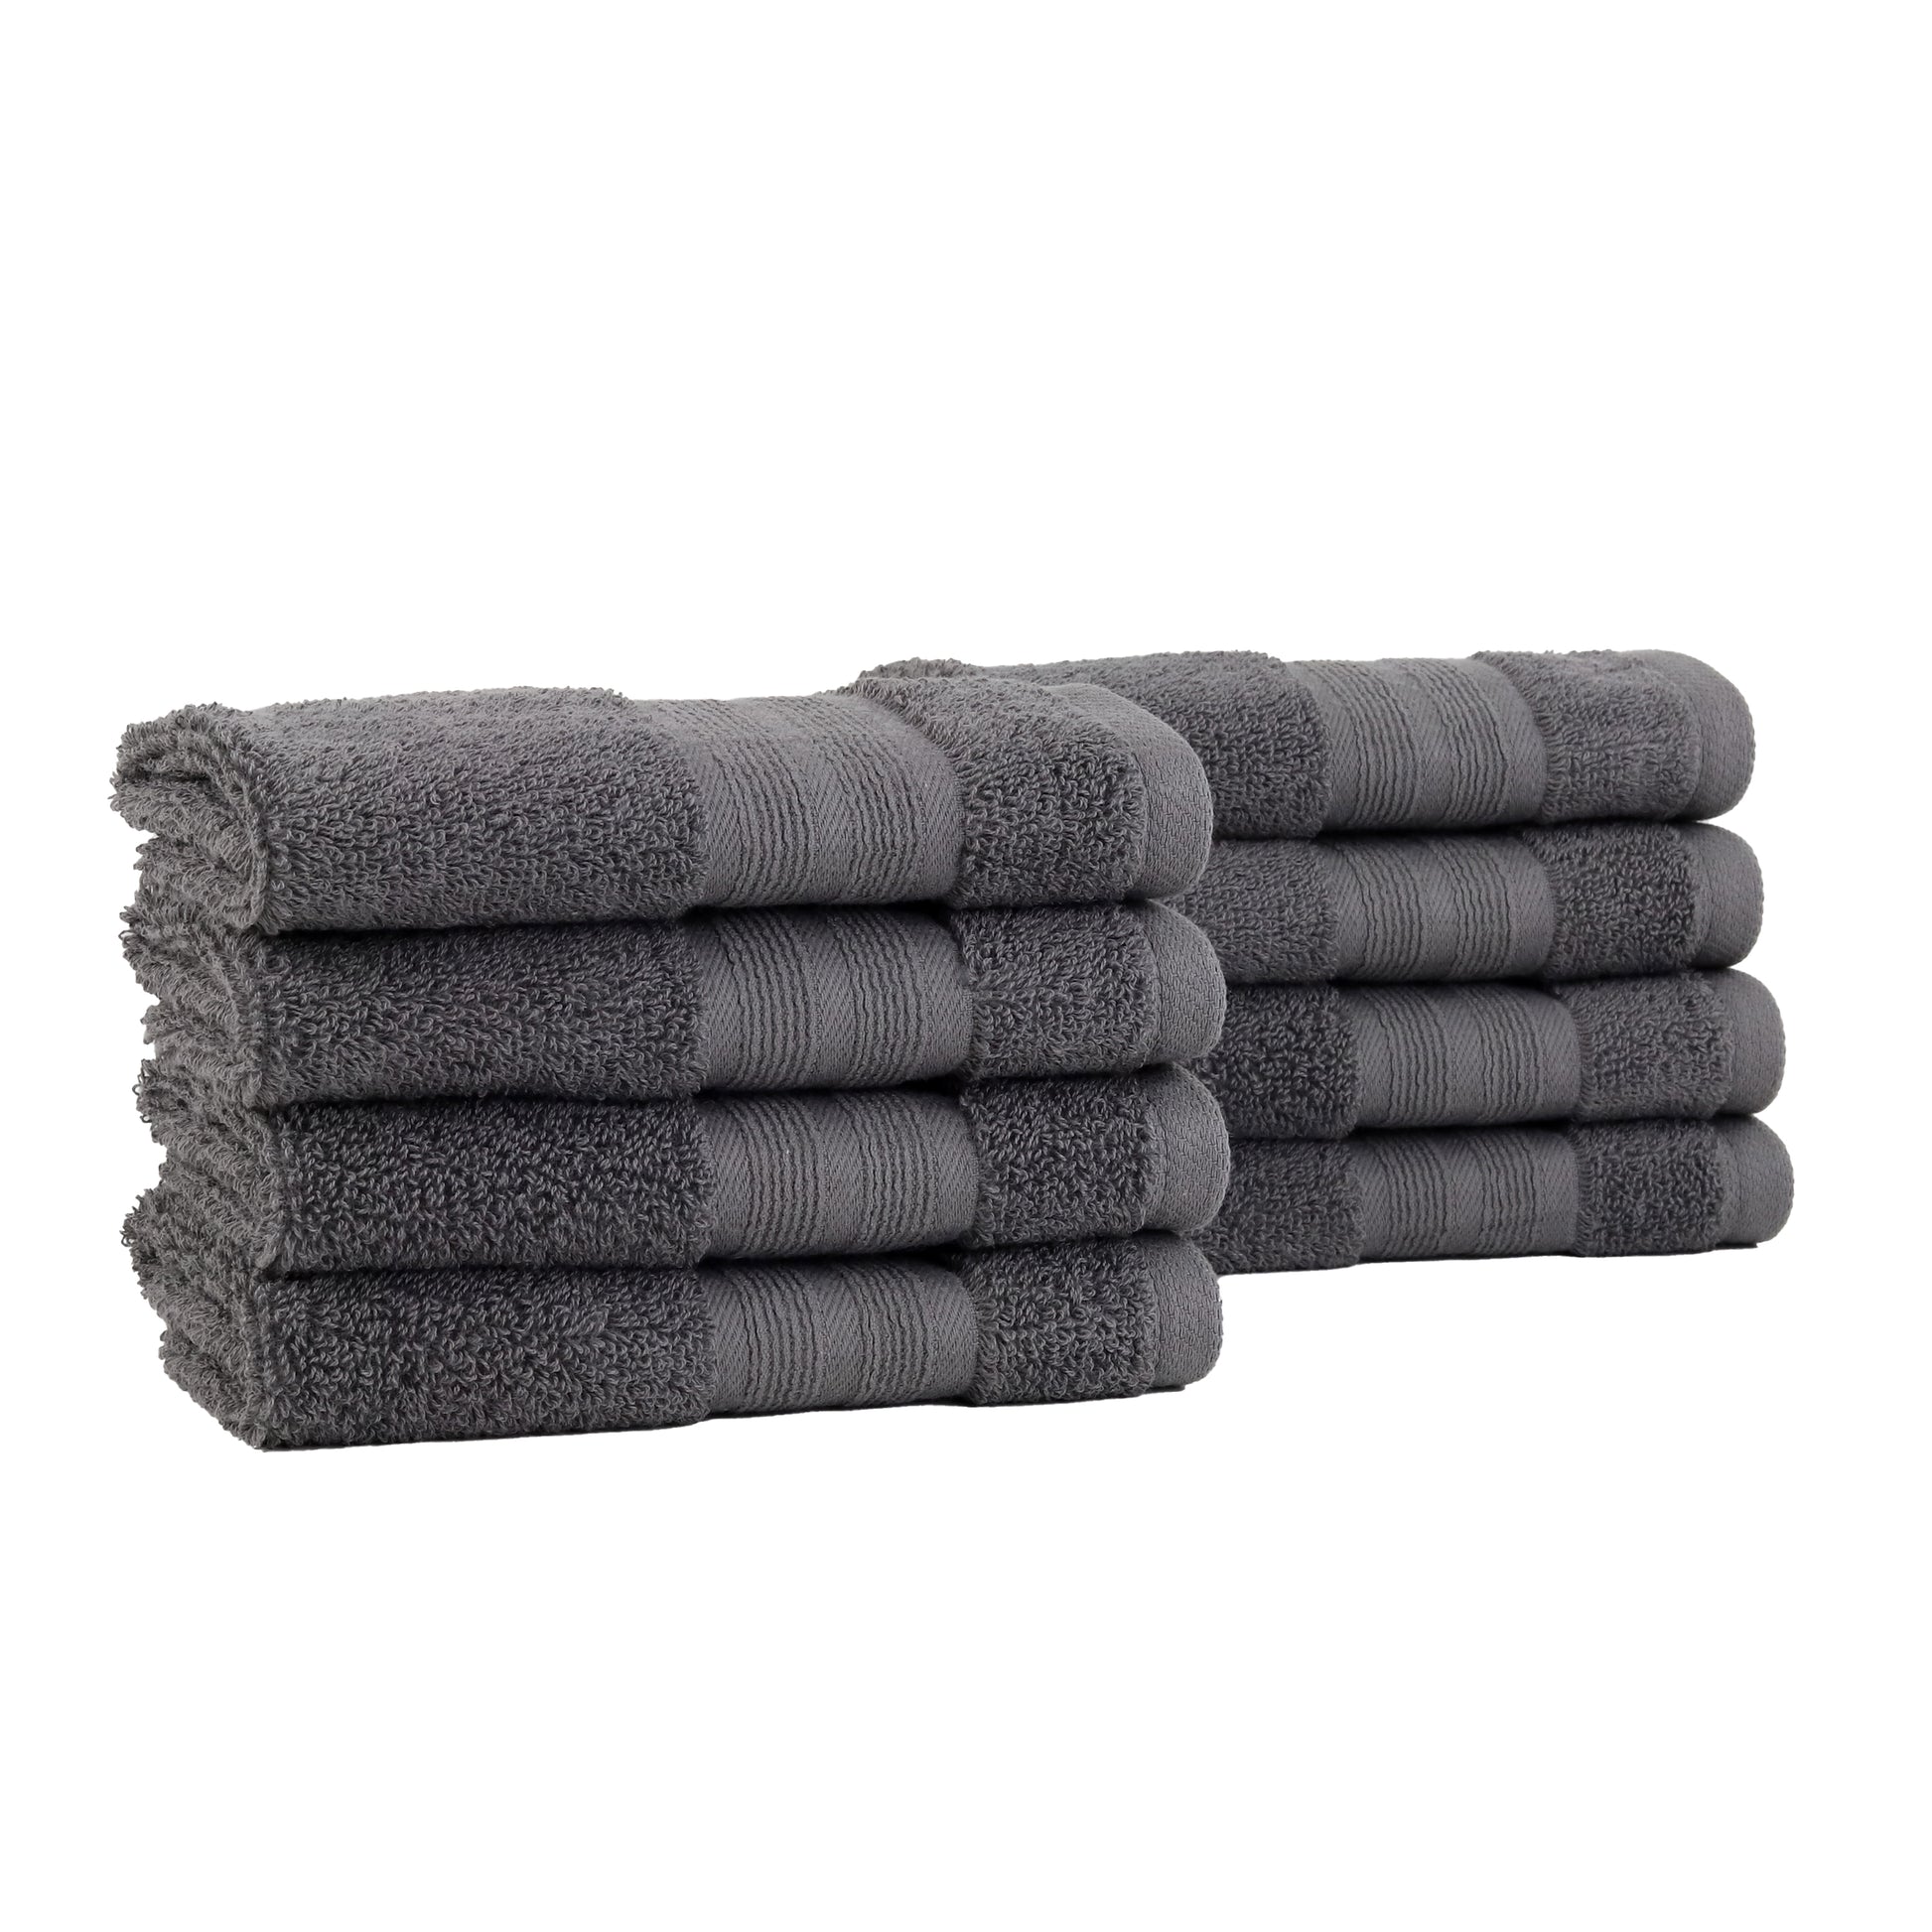 Organic Cotton Towel Set  All American Clothing - All American Clothing Co